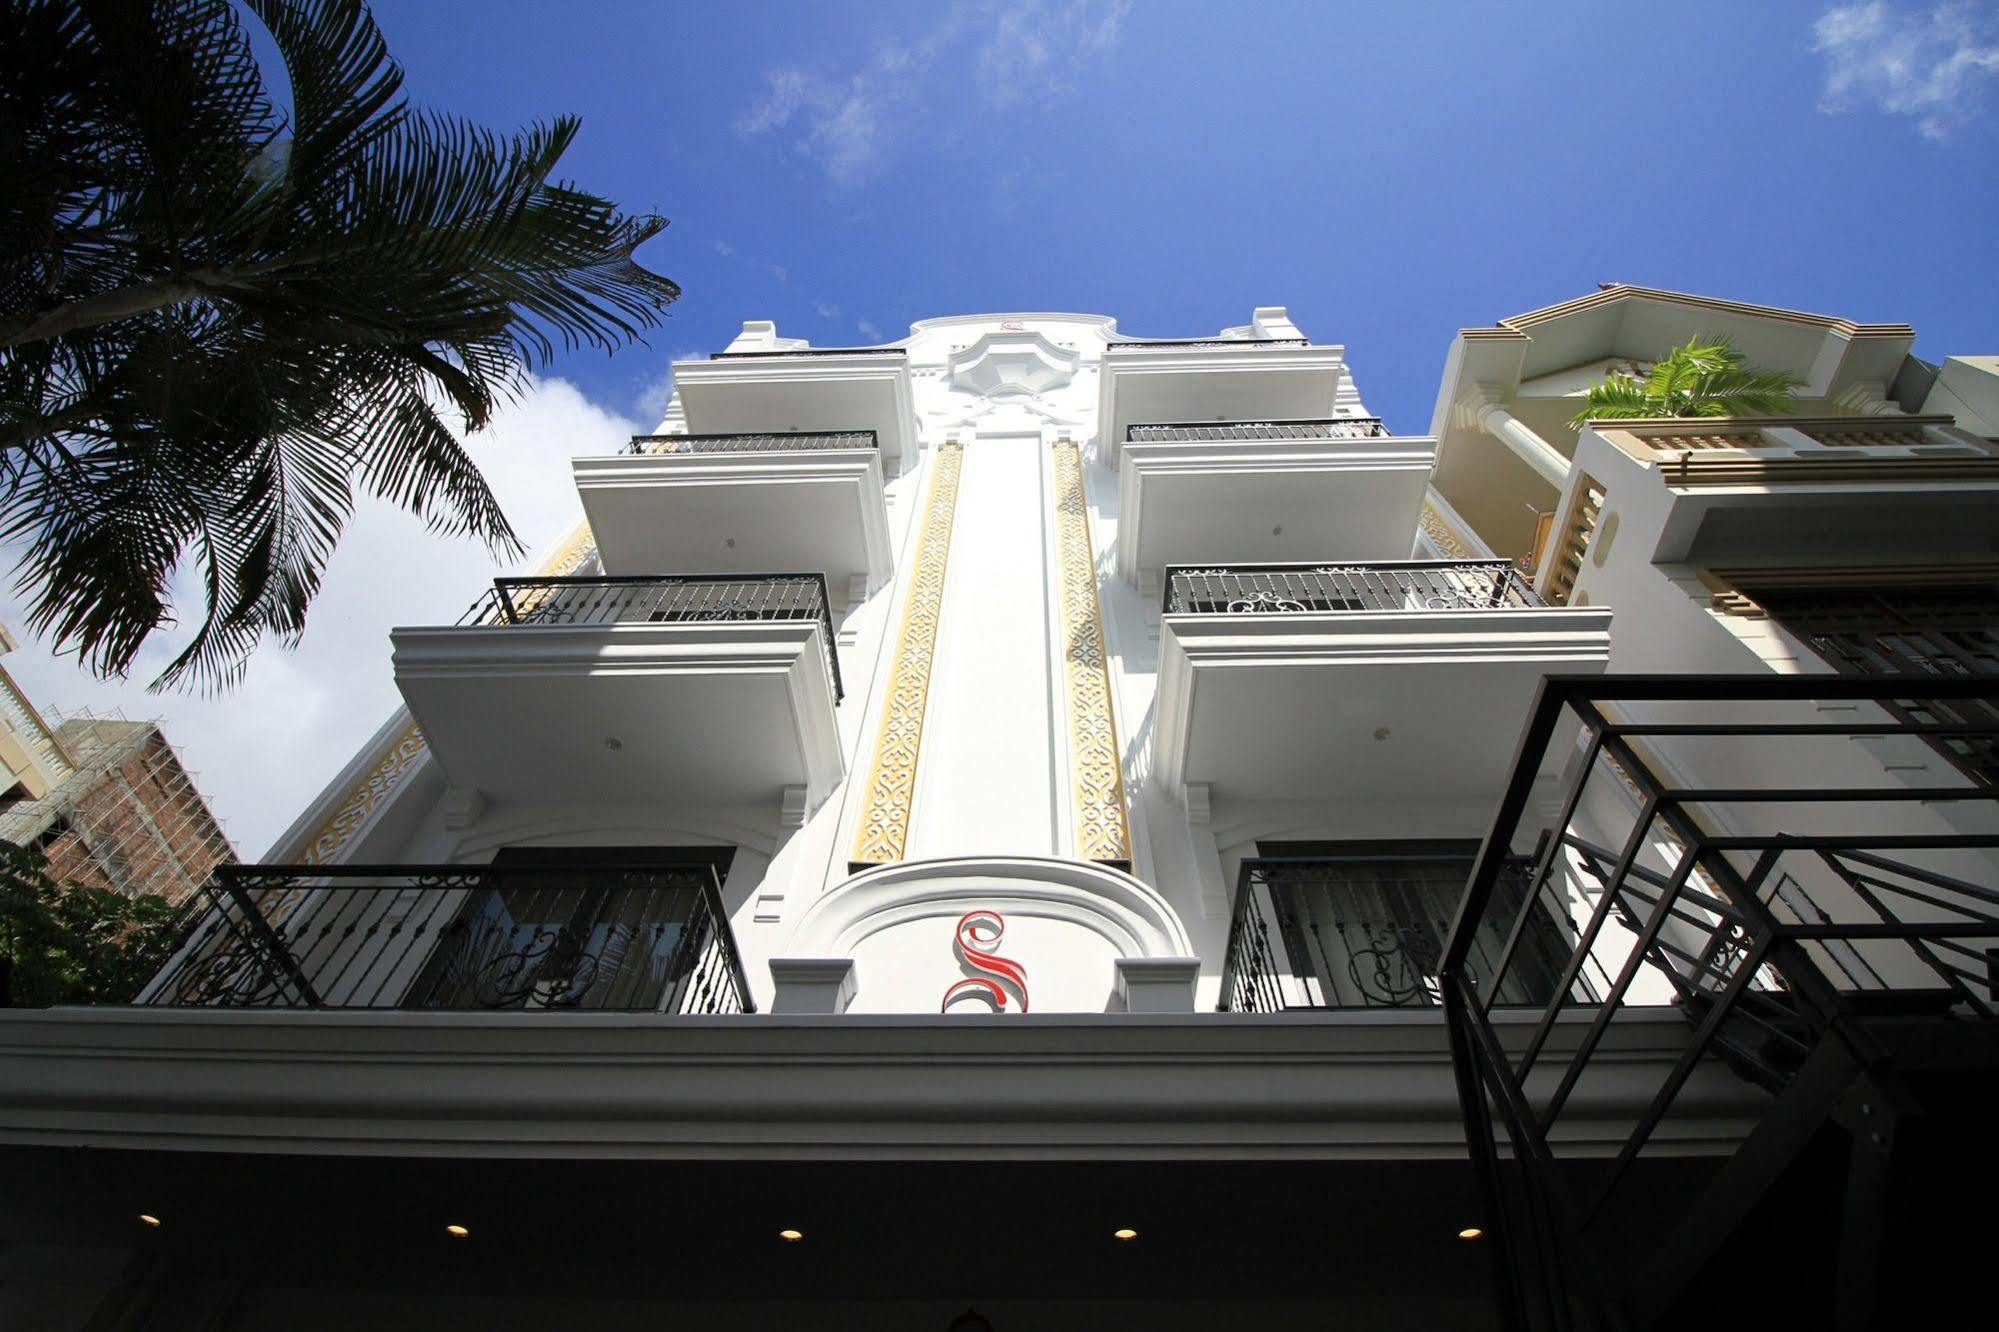 The Scarlett Boutique Hotel Hue Exterior foto